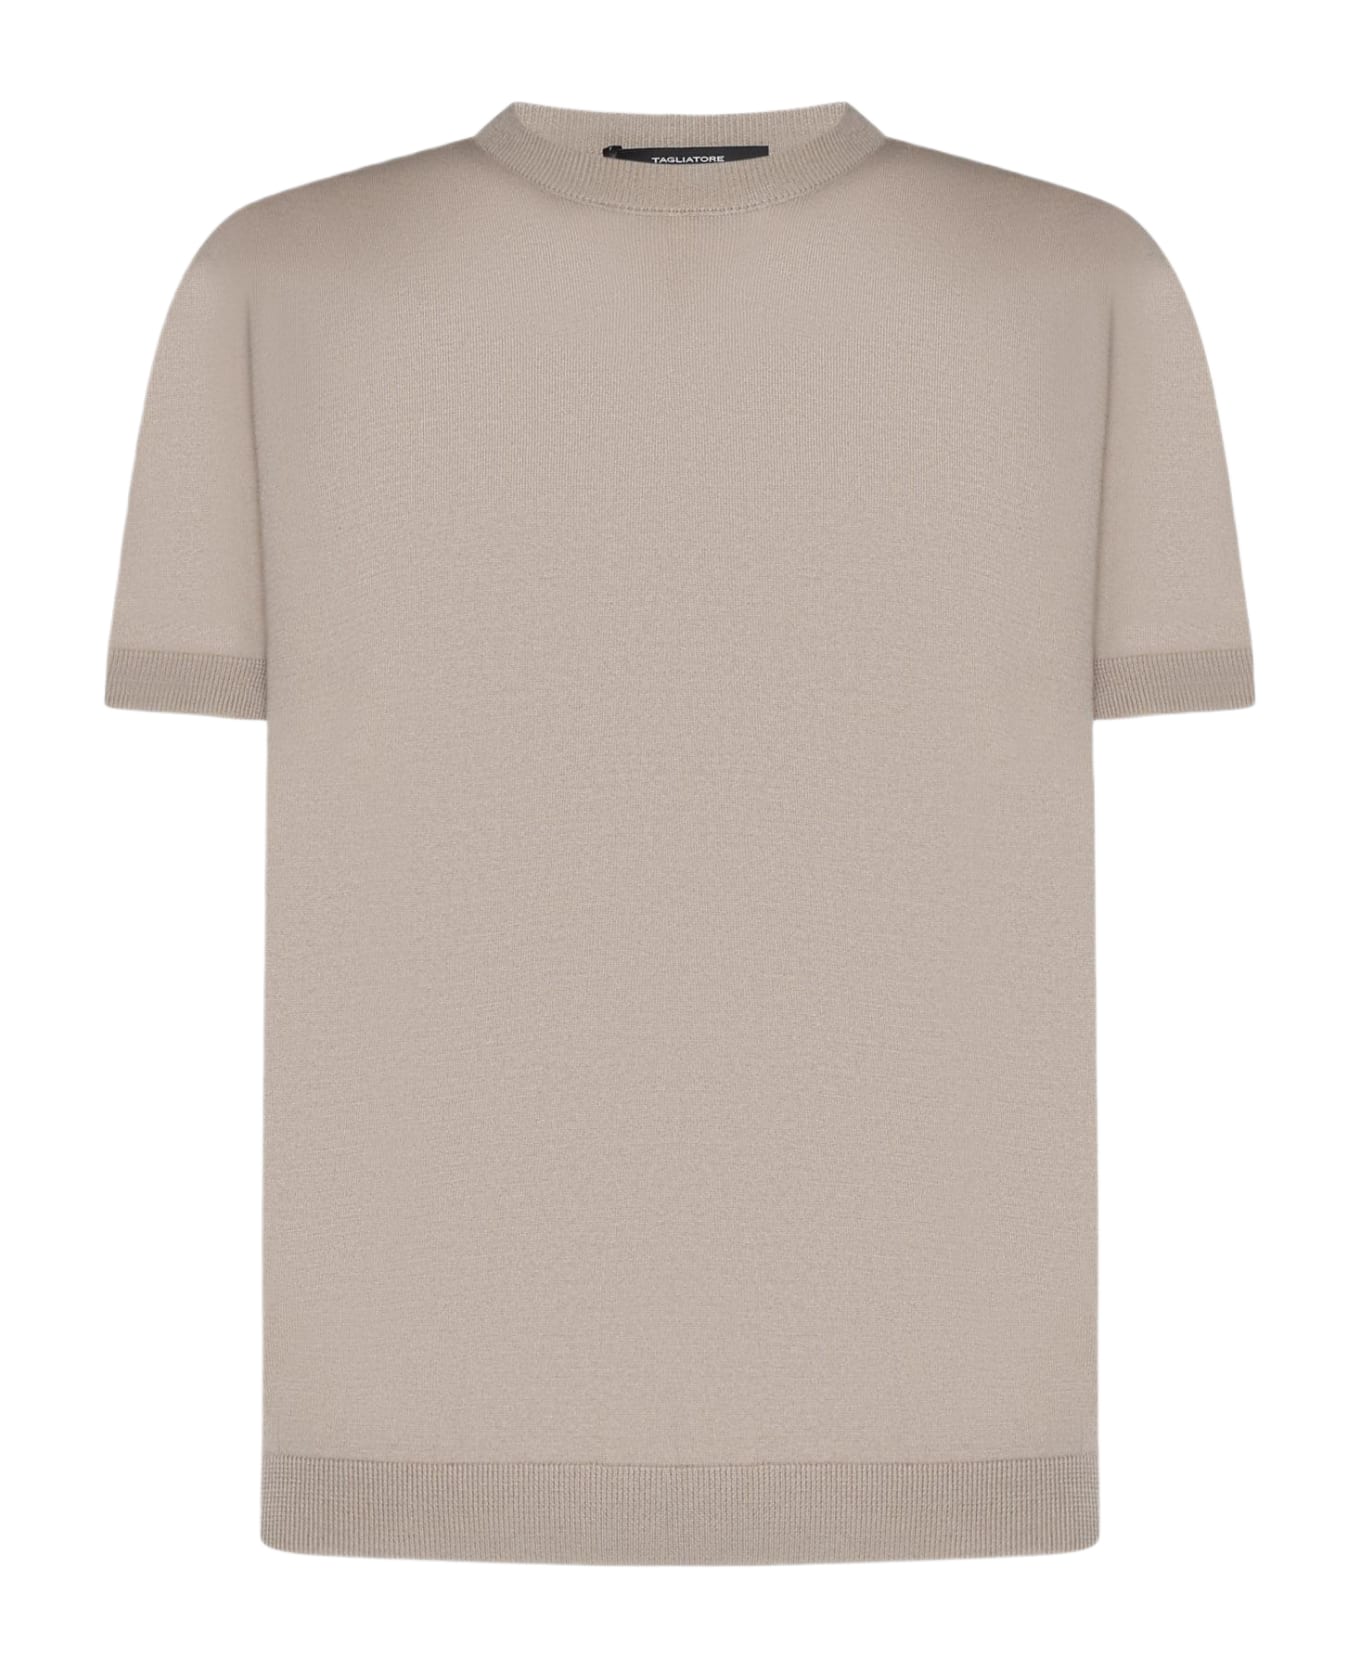 Tagliatore Knit Cotton T-shirt - Taupe